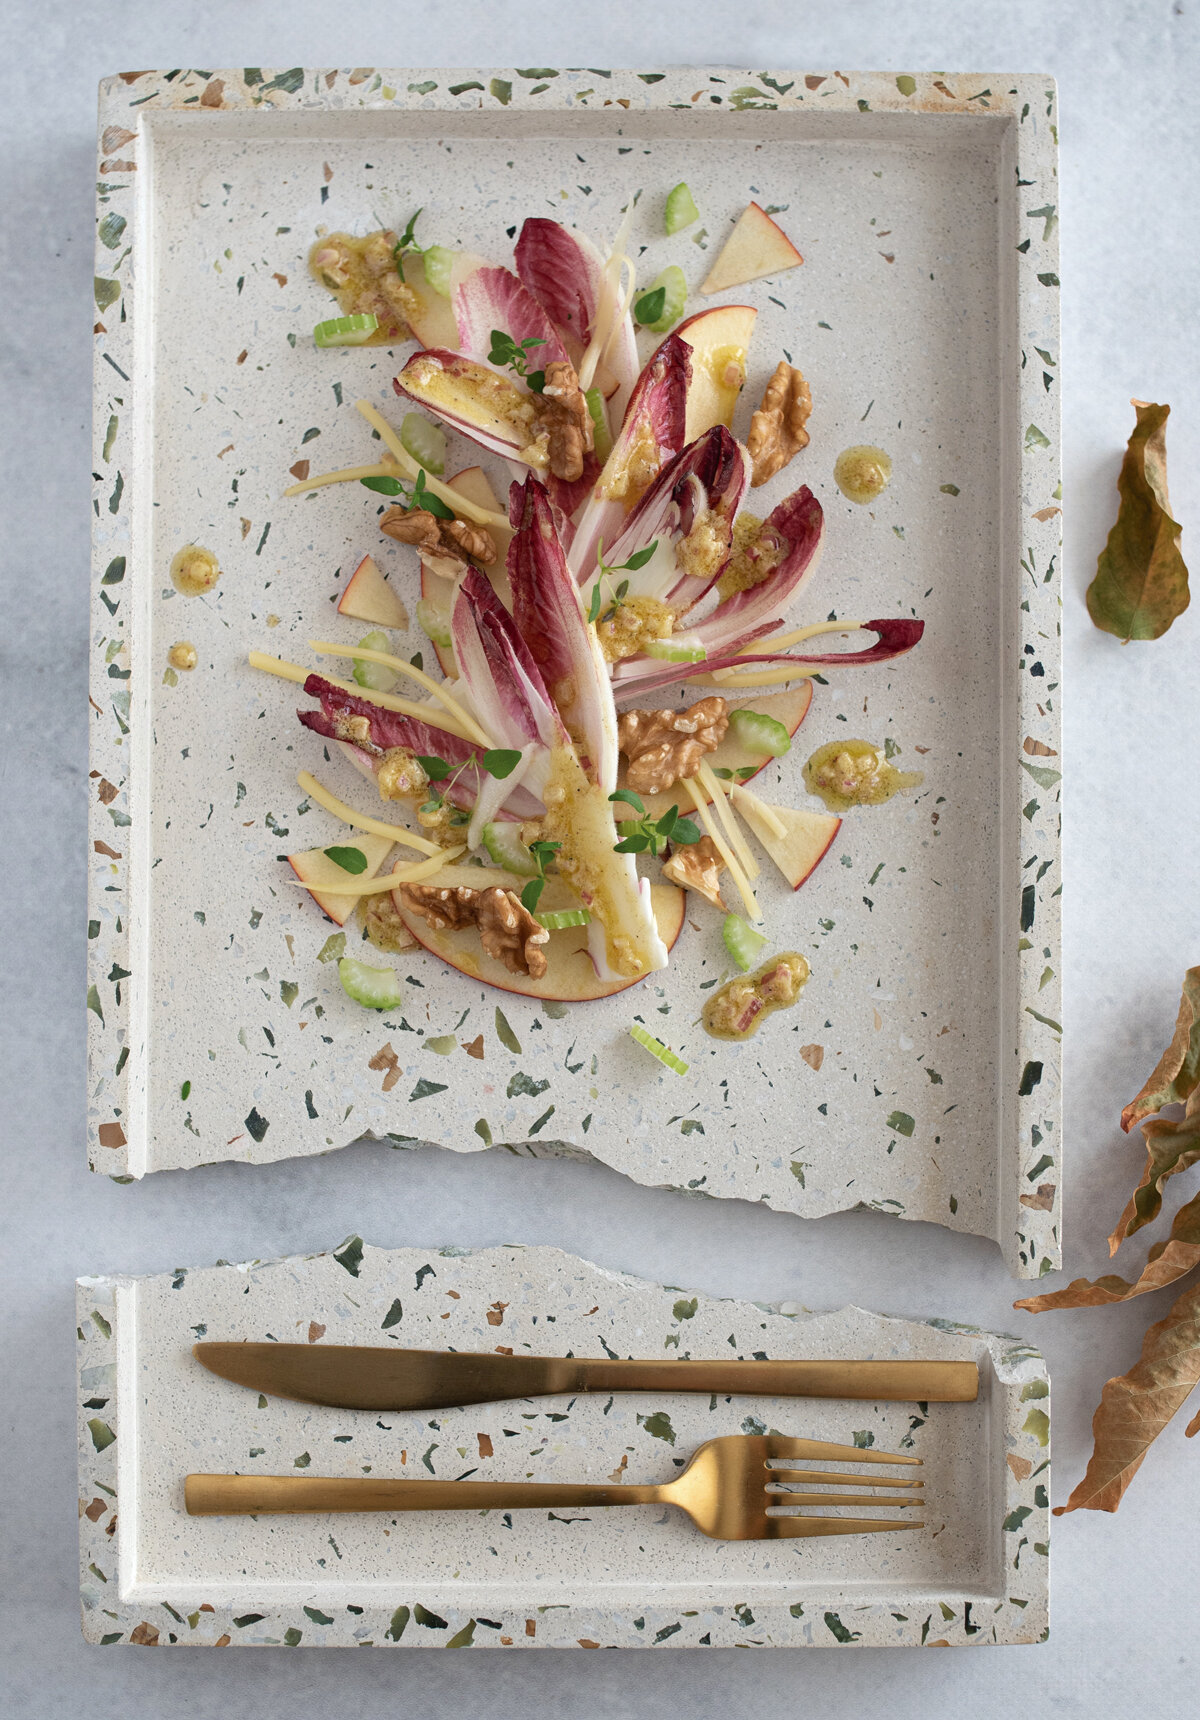 Autumn Salad - The Art of Salad by Julie Deffense